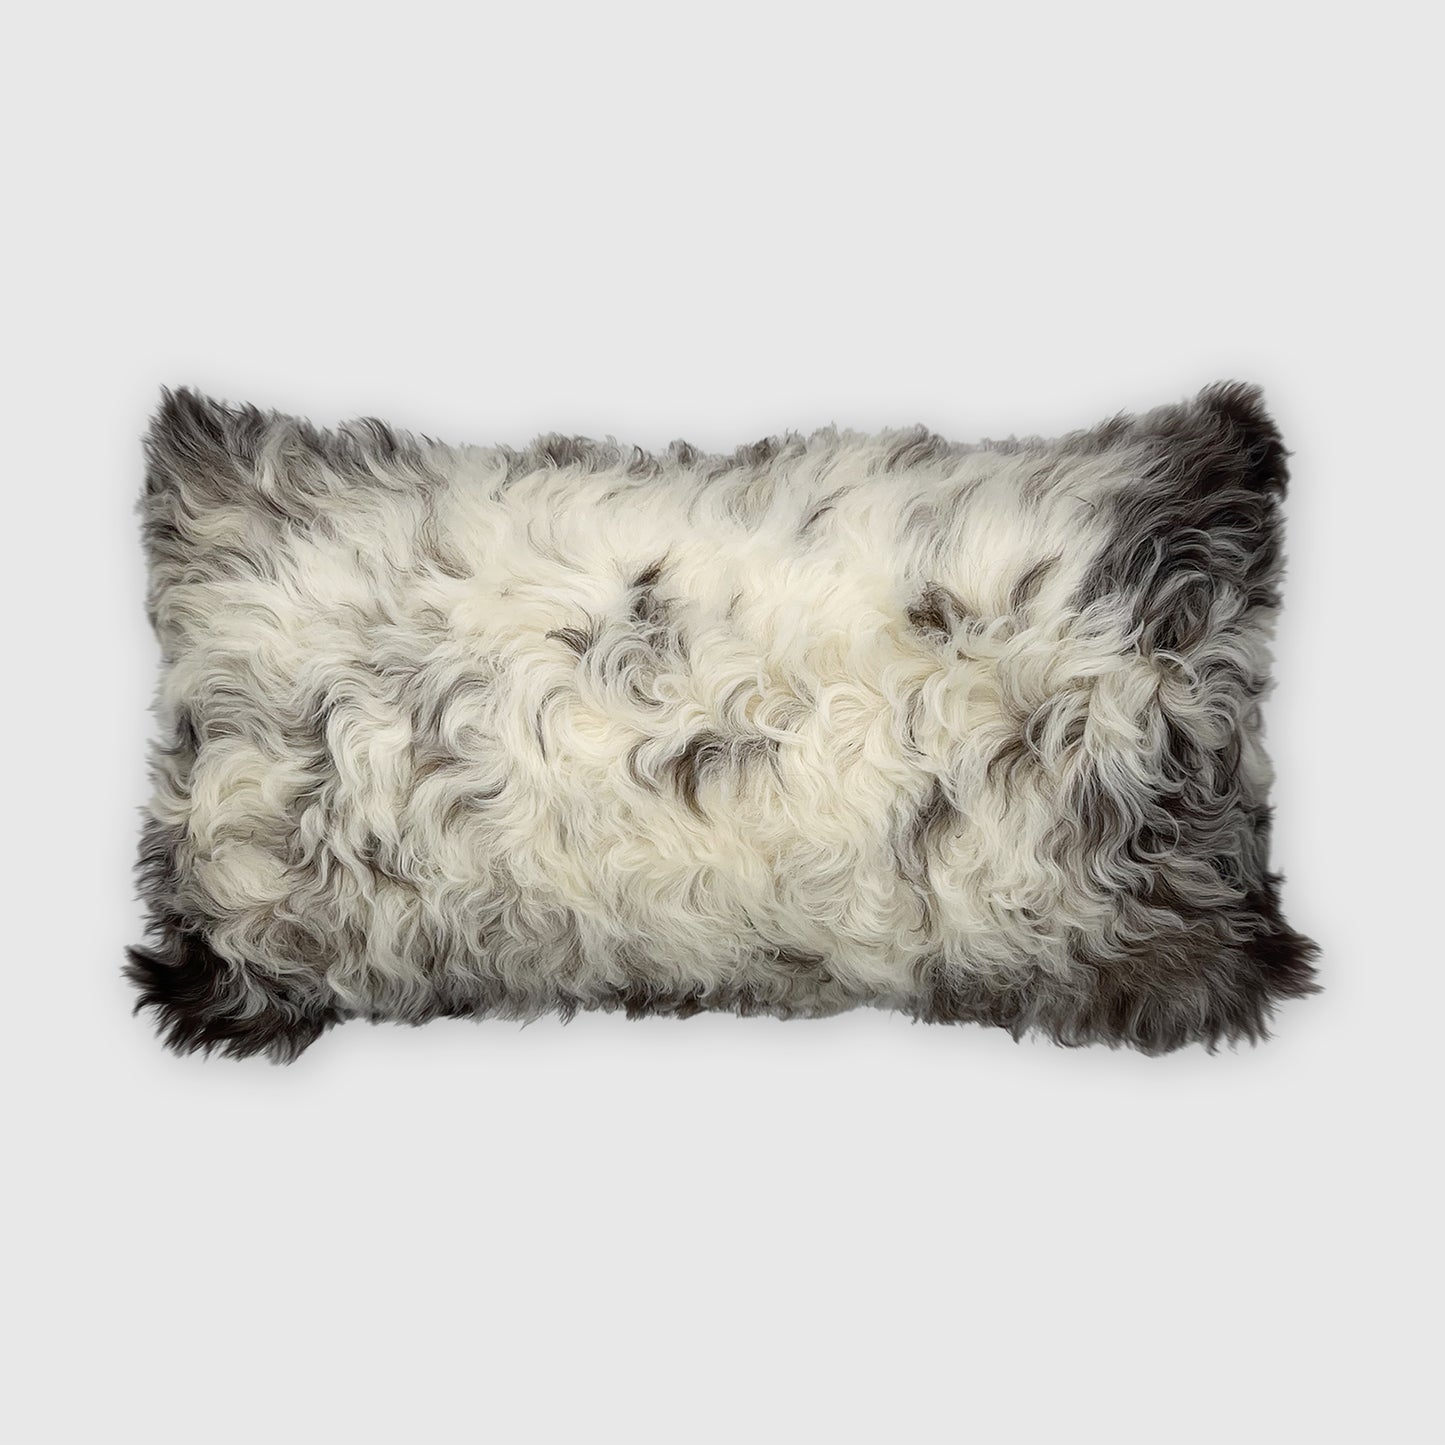 The Mood Tigrado Spanish Lambskin Lumbar Pillow, 12x22 in., Mottled Brown/Ivory